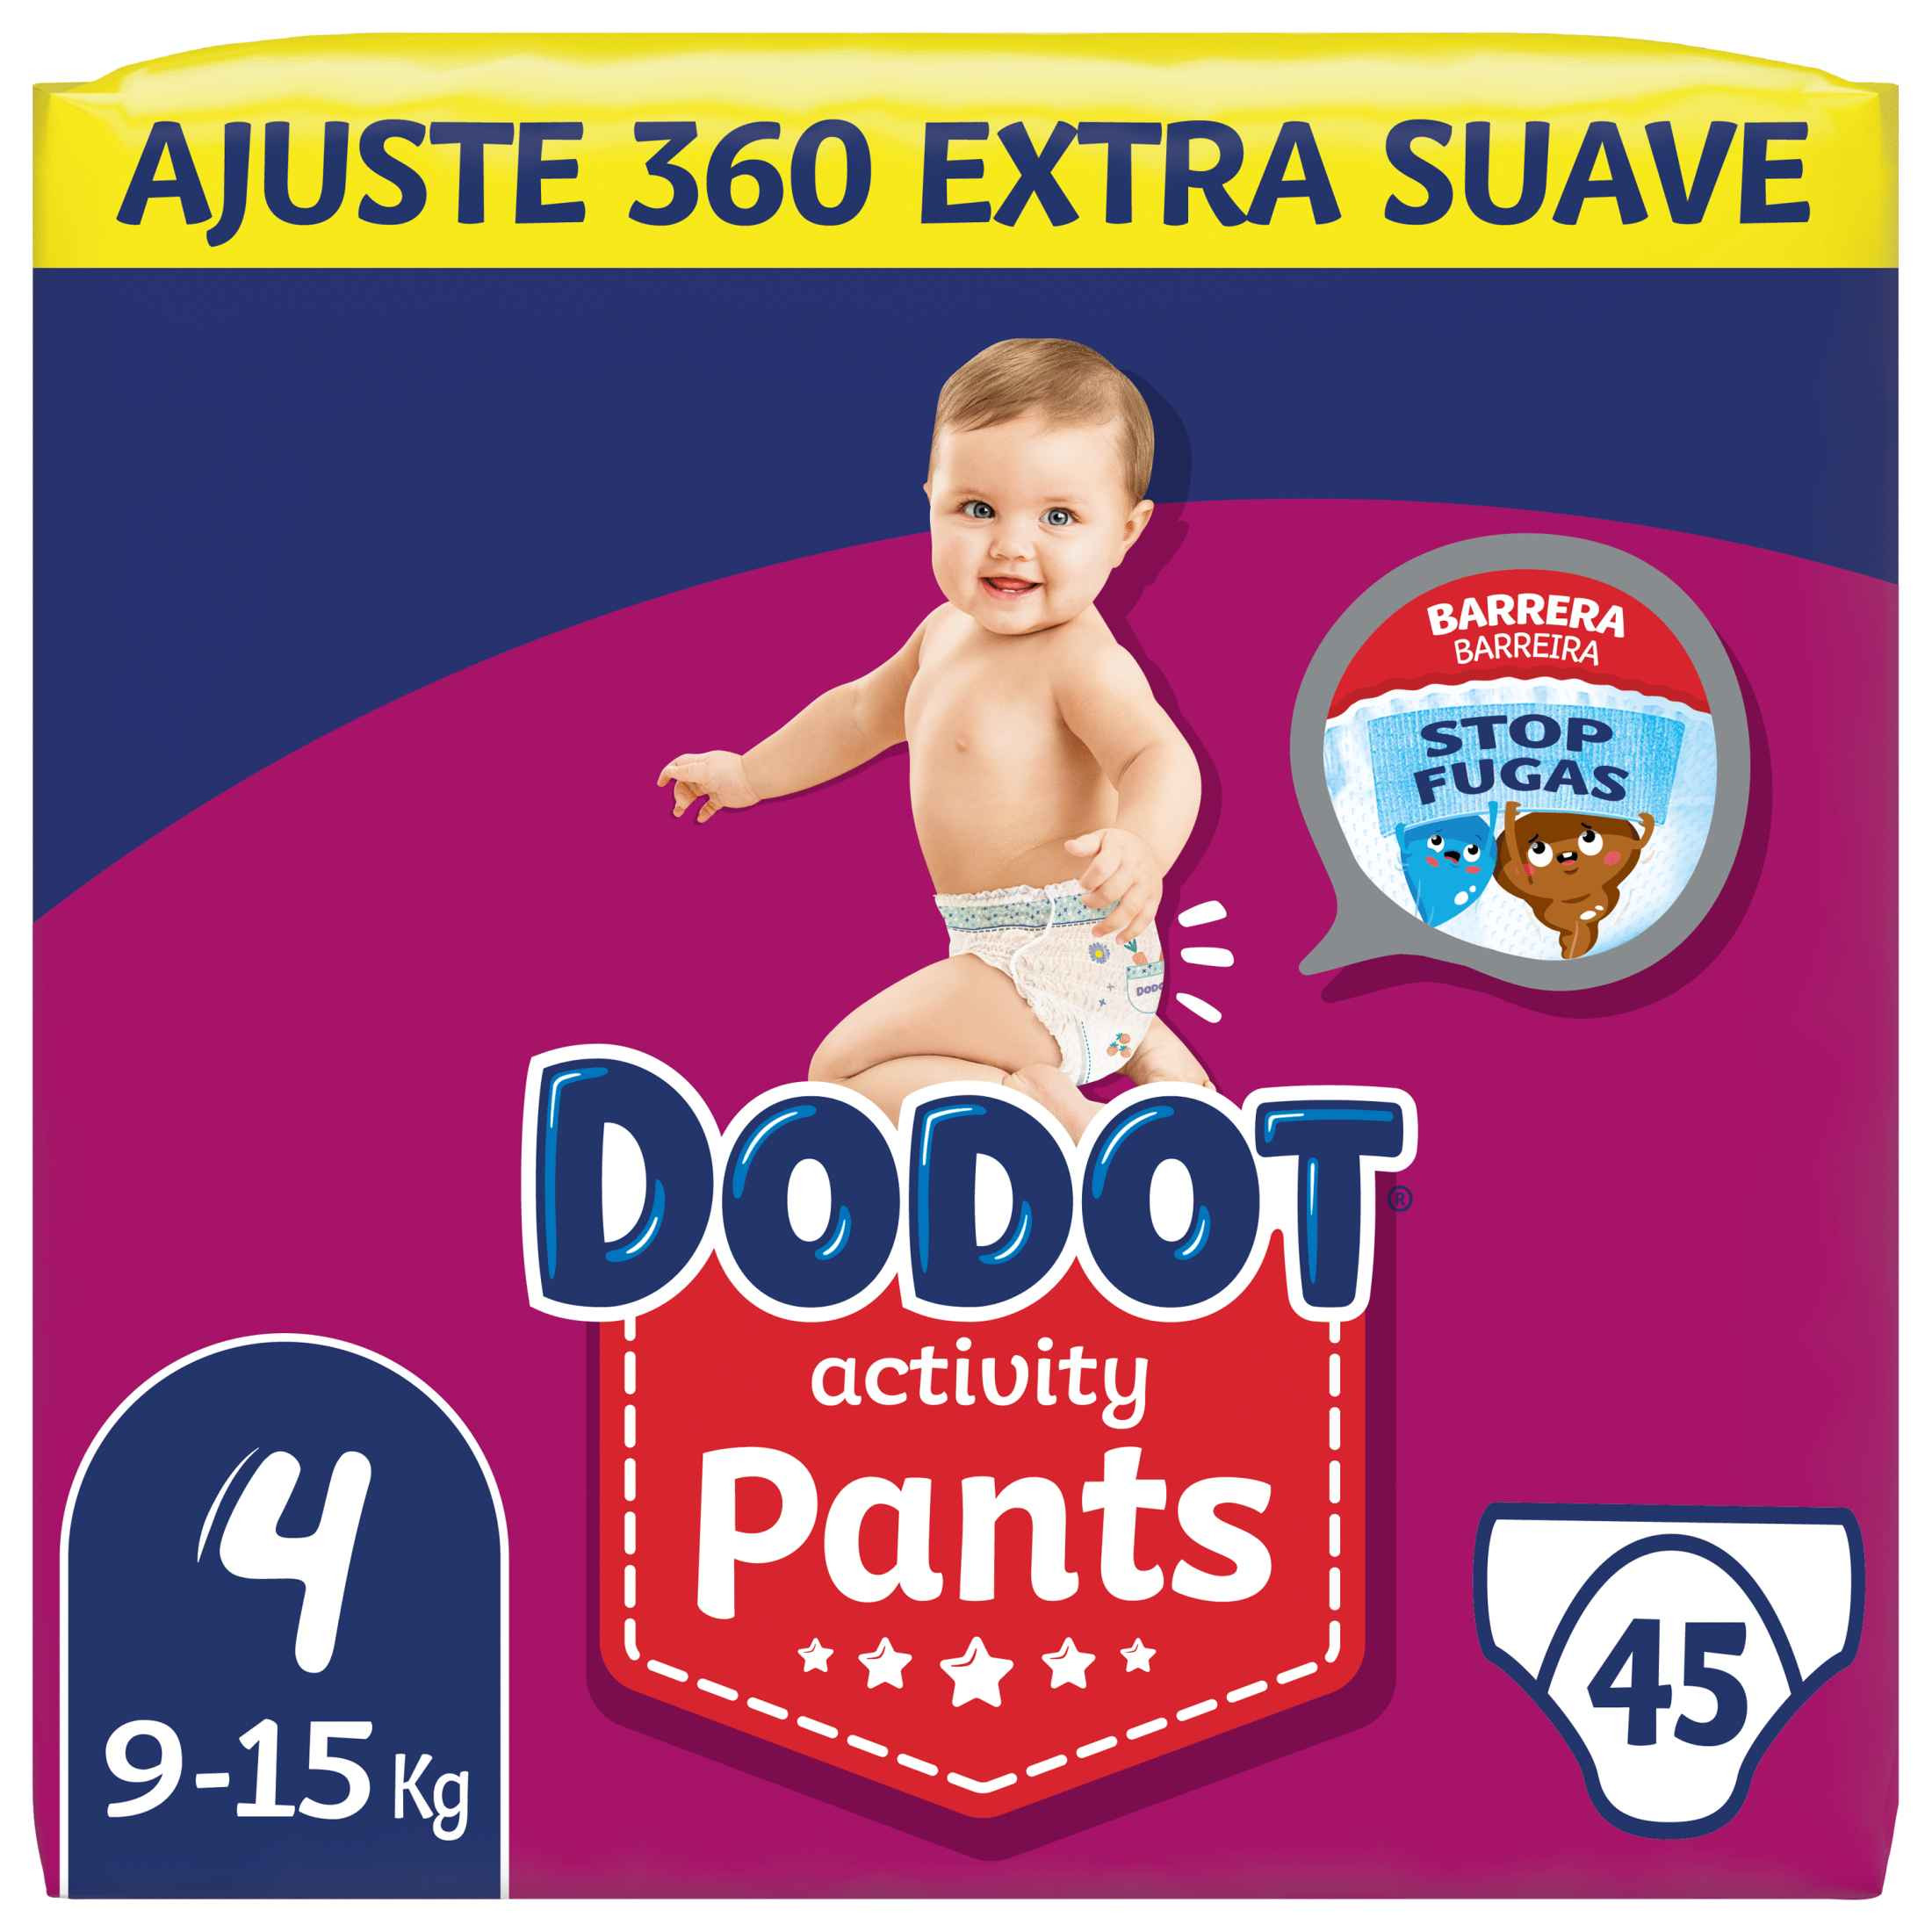 Dodot Sensitive Extra Pañales Bebé, Tallas 1,2,3,4,5,6.